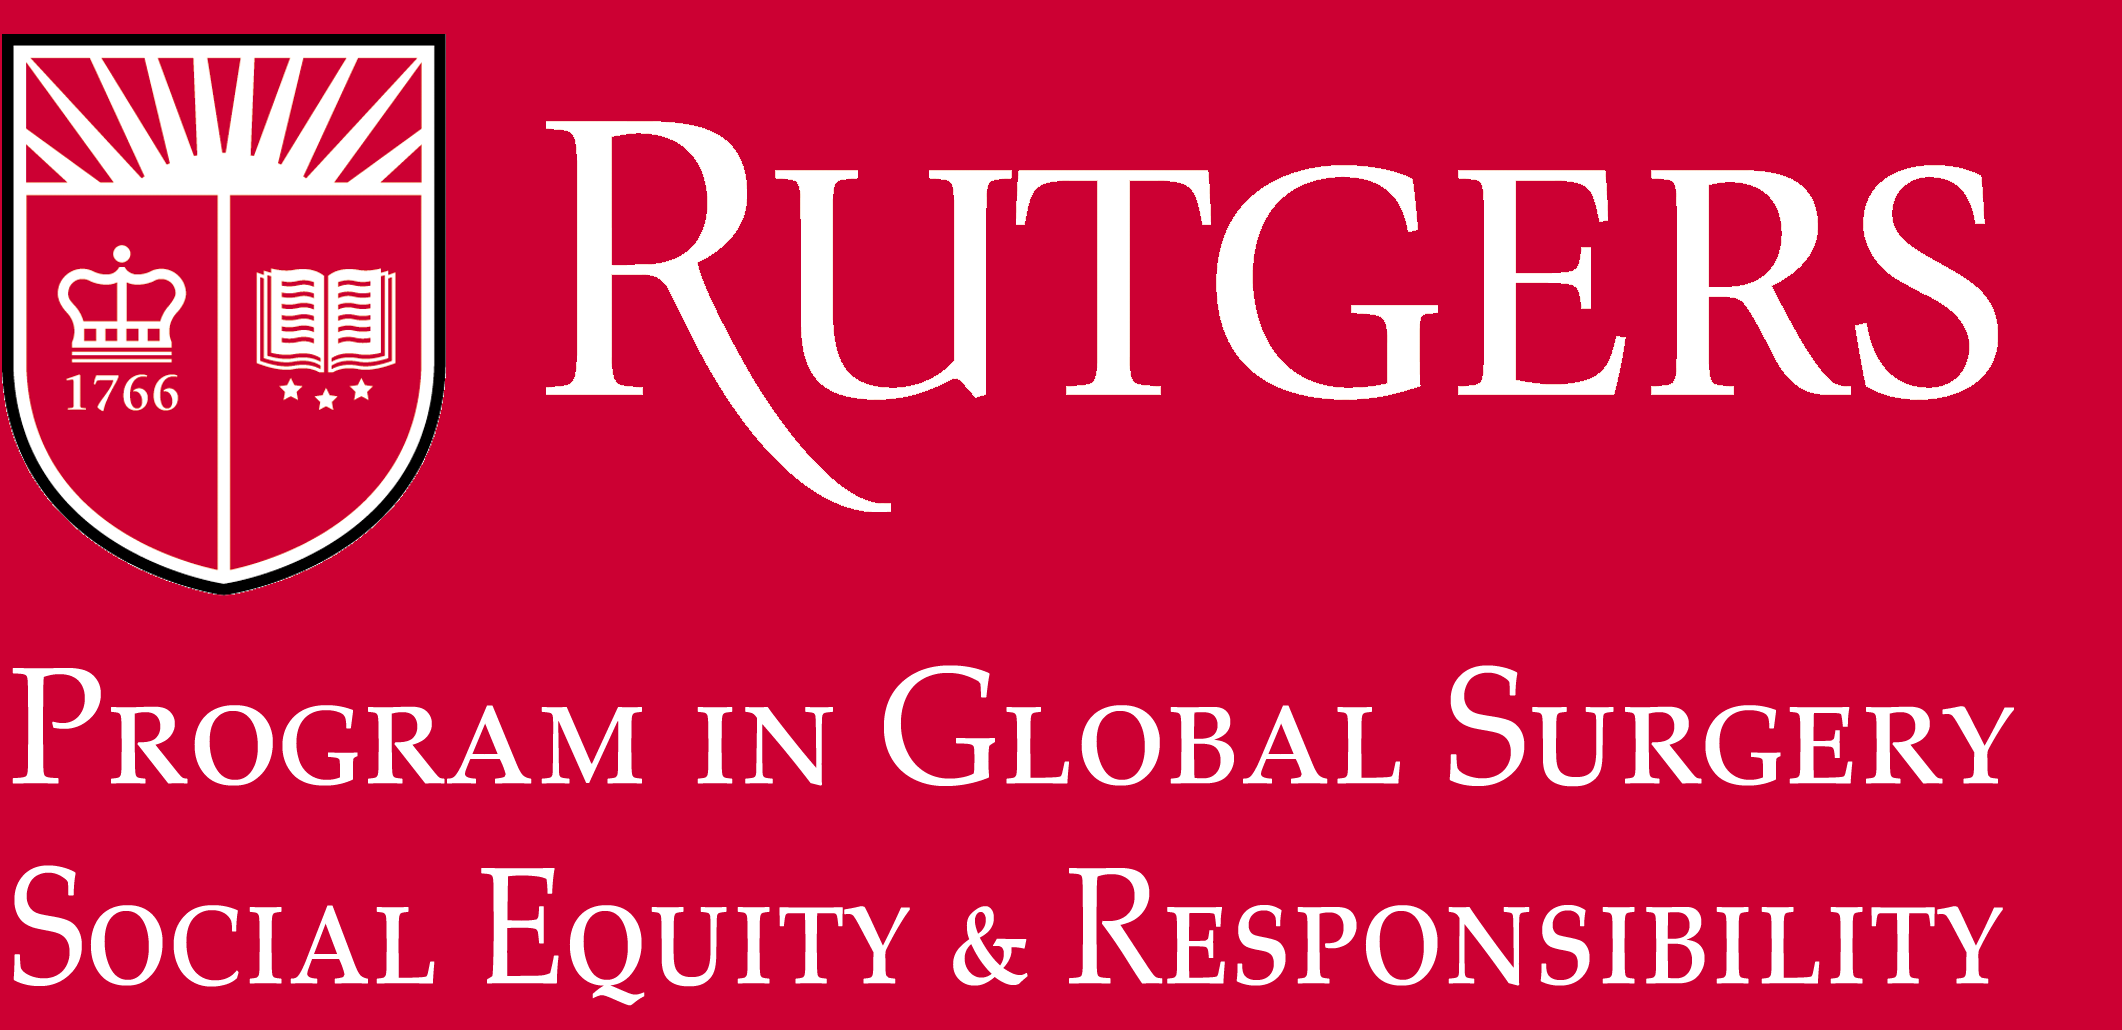 Rutgers Global Surgery